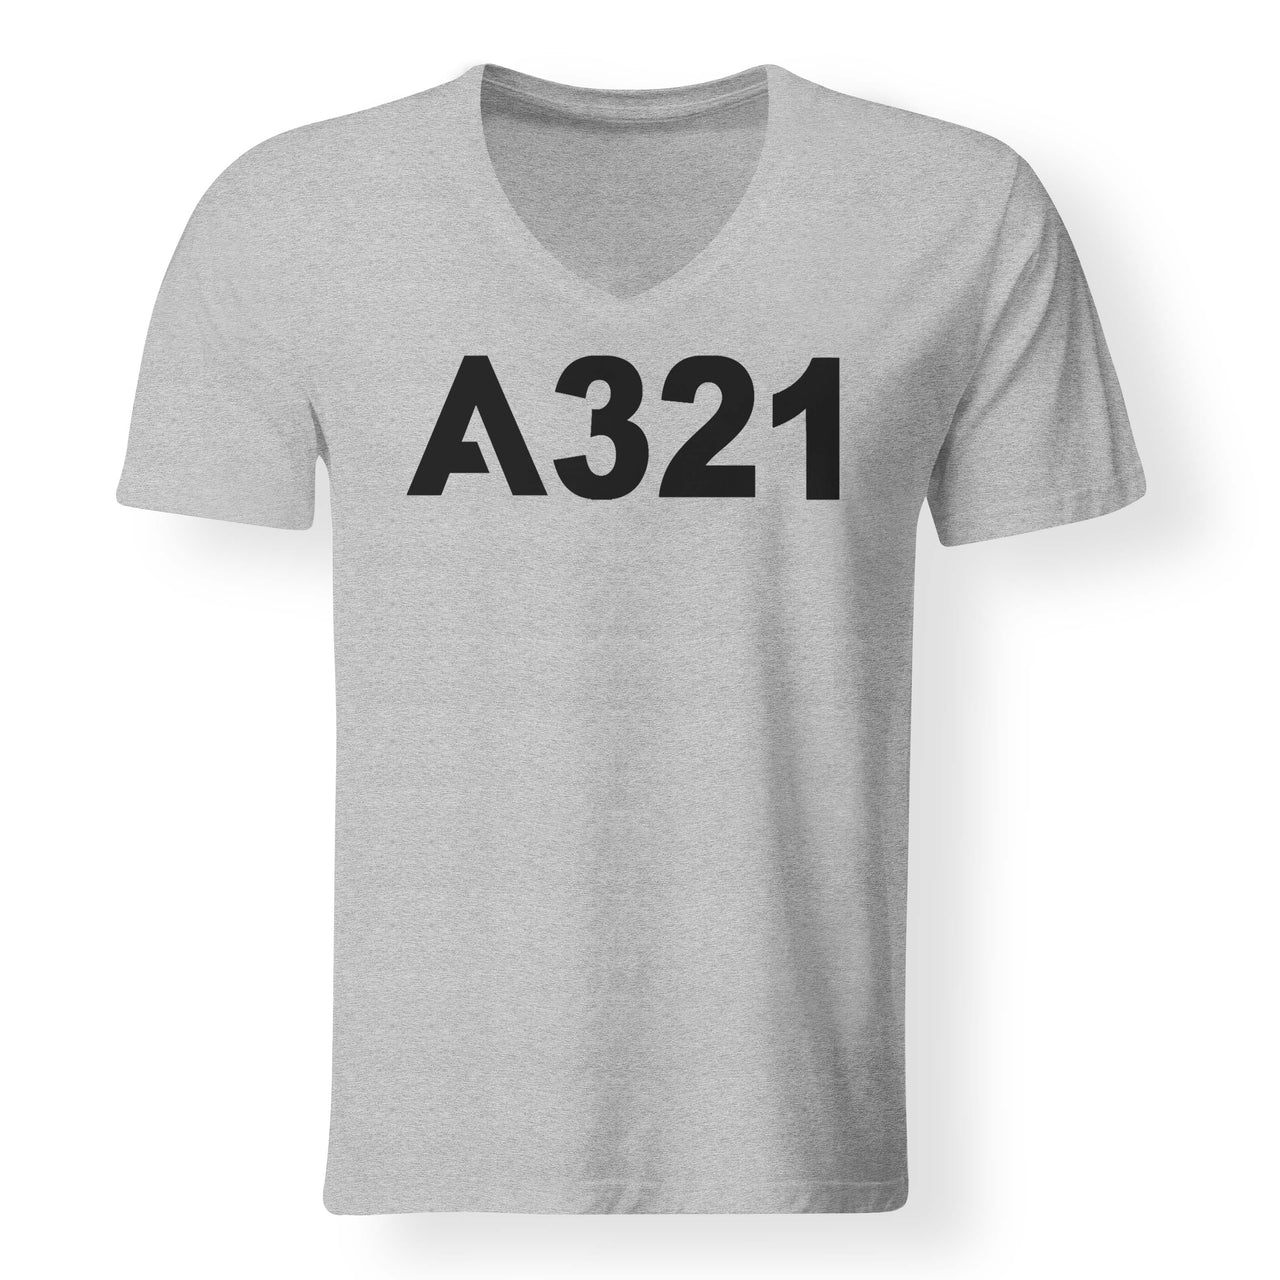 A321 Flat Text Designed V-Neck T-Shirts